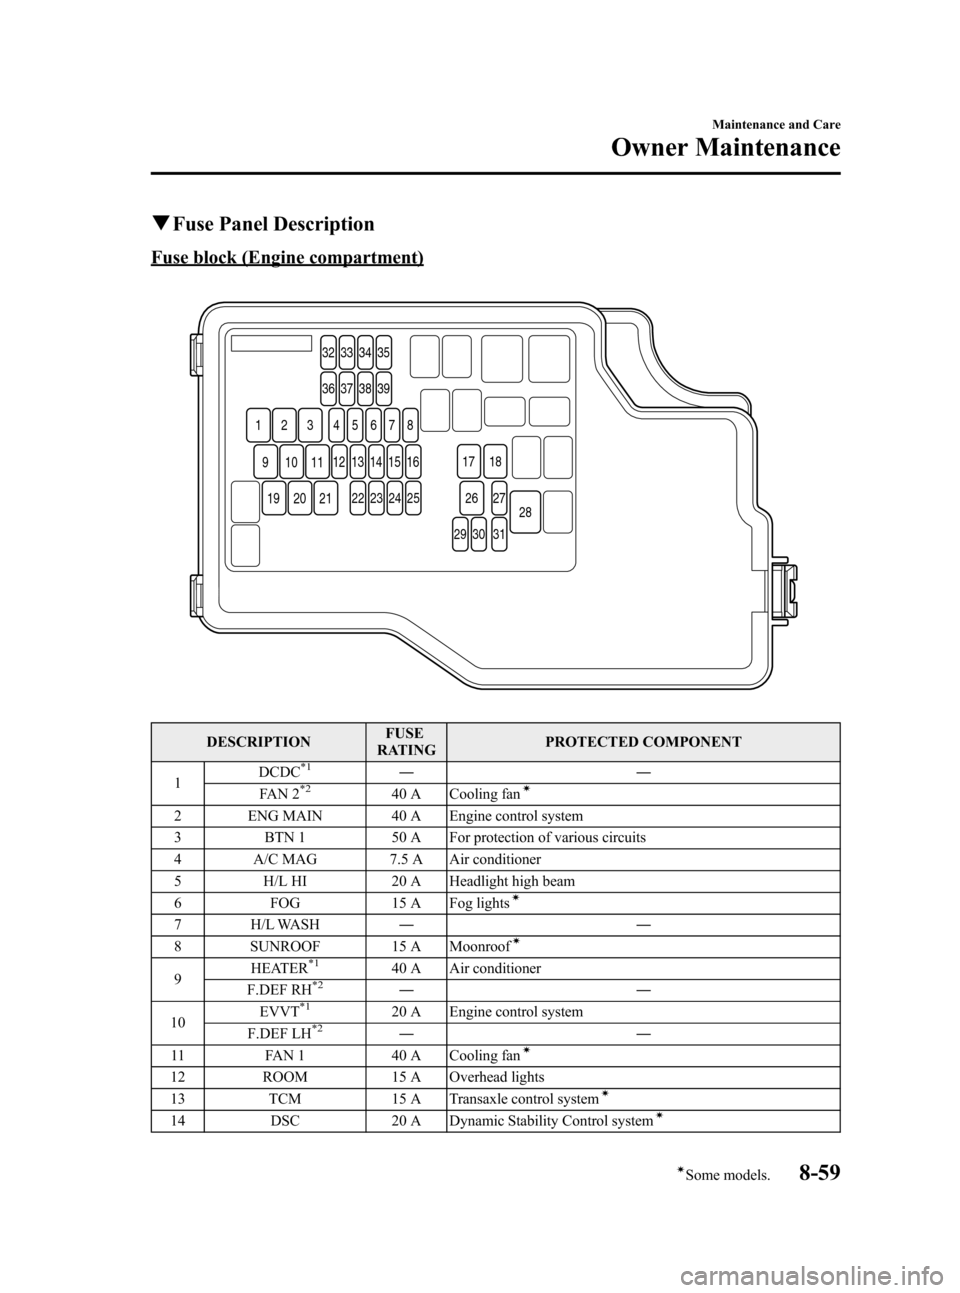 MAZDA MODEL 3 HATCHBACK 2012  Owners Manual (in English) Black plate (441,1)
qFuse Panel Description
Fuse block (Engine compartment)
32 33 34 35
36 37 38 39
54
1 2 3 678
1312 14 15 16
22
11109
212019
23 24 25
29 30 3127
28
26
17 18
DESCRIPTION
FUSE
RATING P